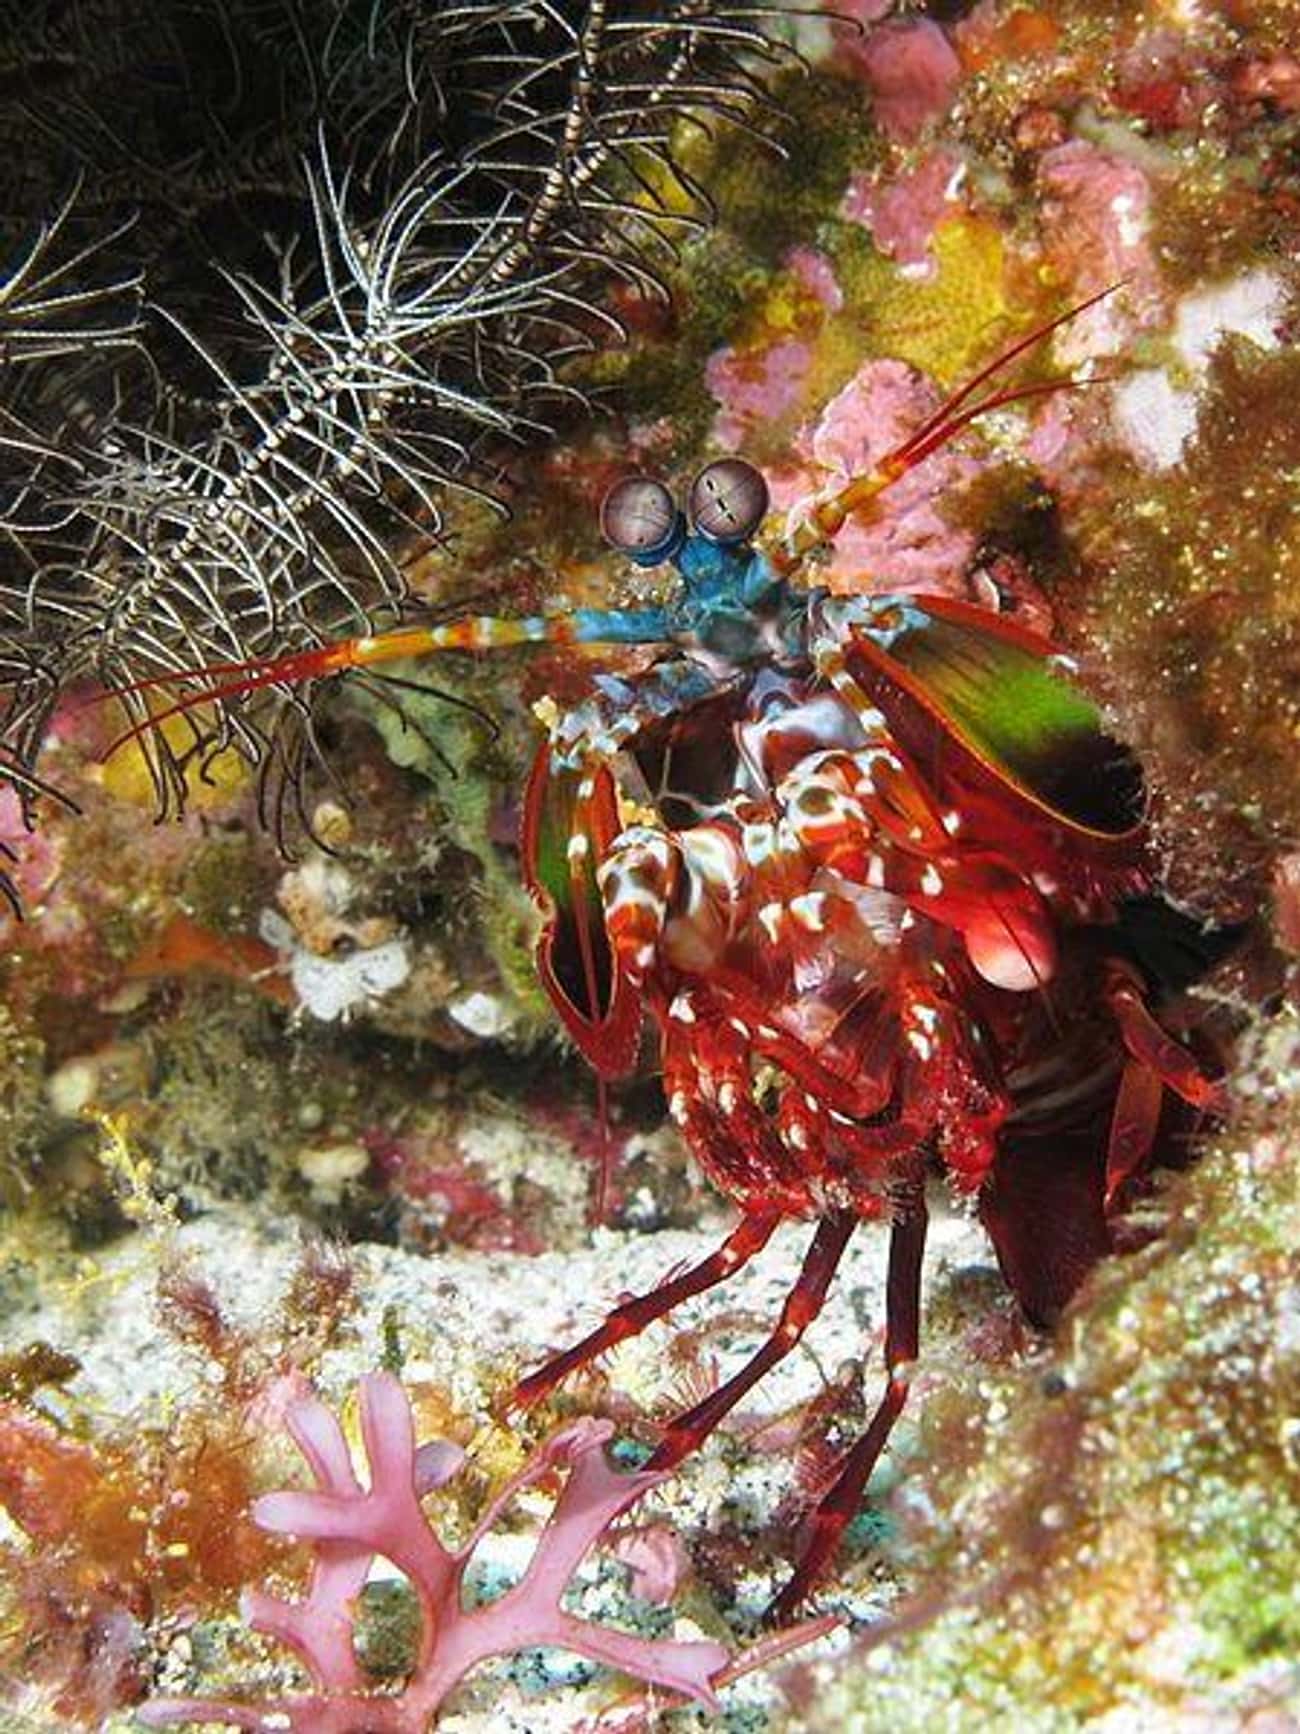 Mantis Shrimp Have The World's Fastest Punch